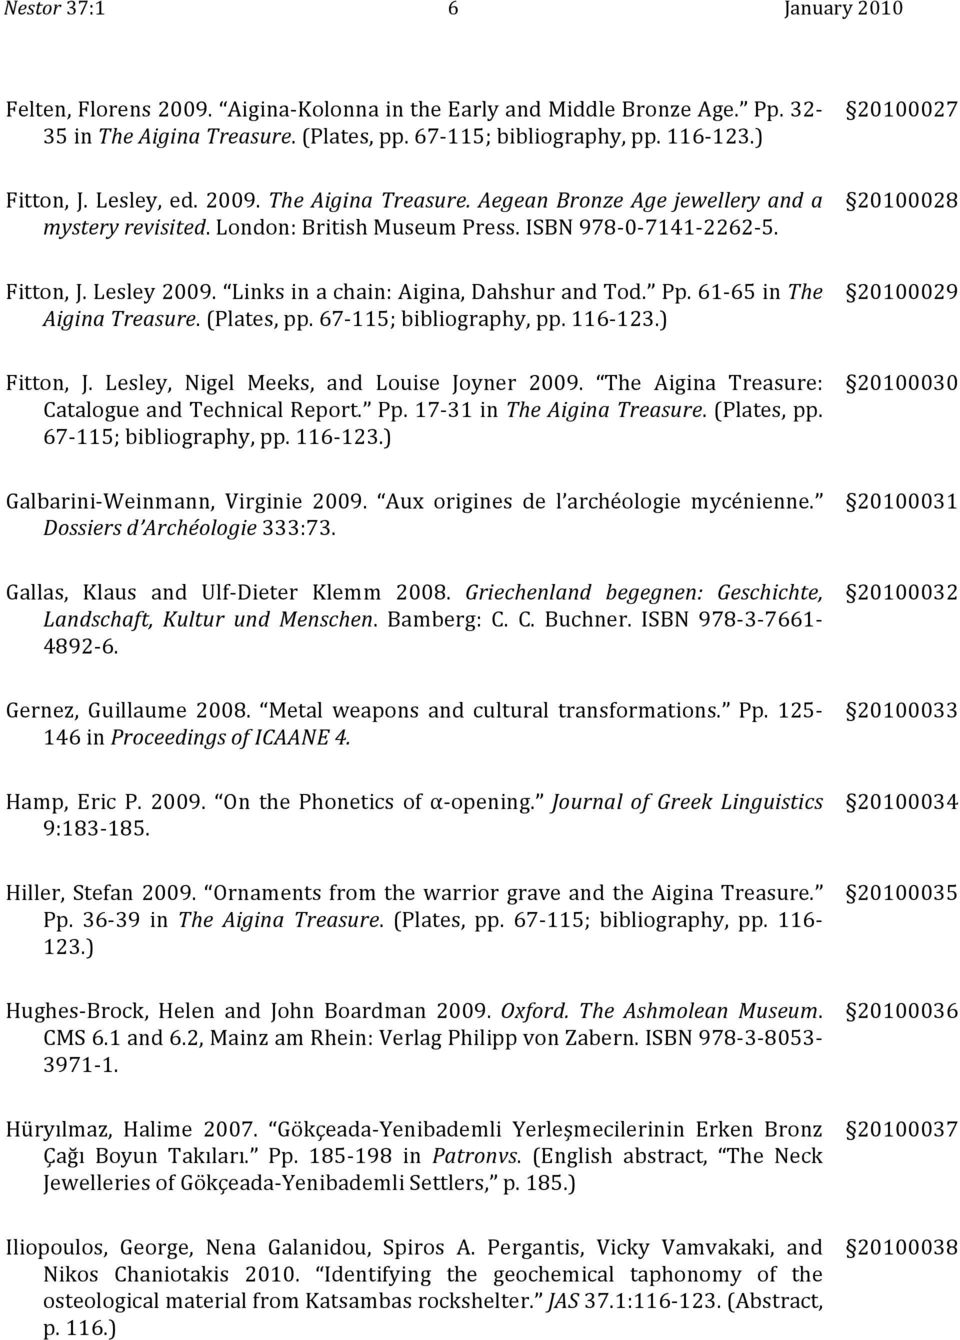 61 65inThe AiginaTreasure.(Plates,pp.67 115;bibliography,pp.116 123.) 20100029 Fitton, J. Lesley, Nigel Meeks, and Louise Joyner 2009. The Aigina Treasure: CatalogueandTechnicalReport. Pp.